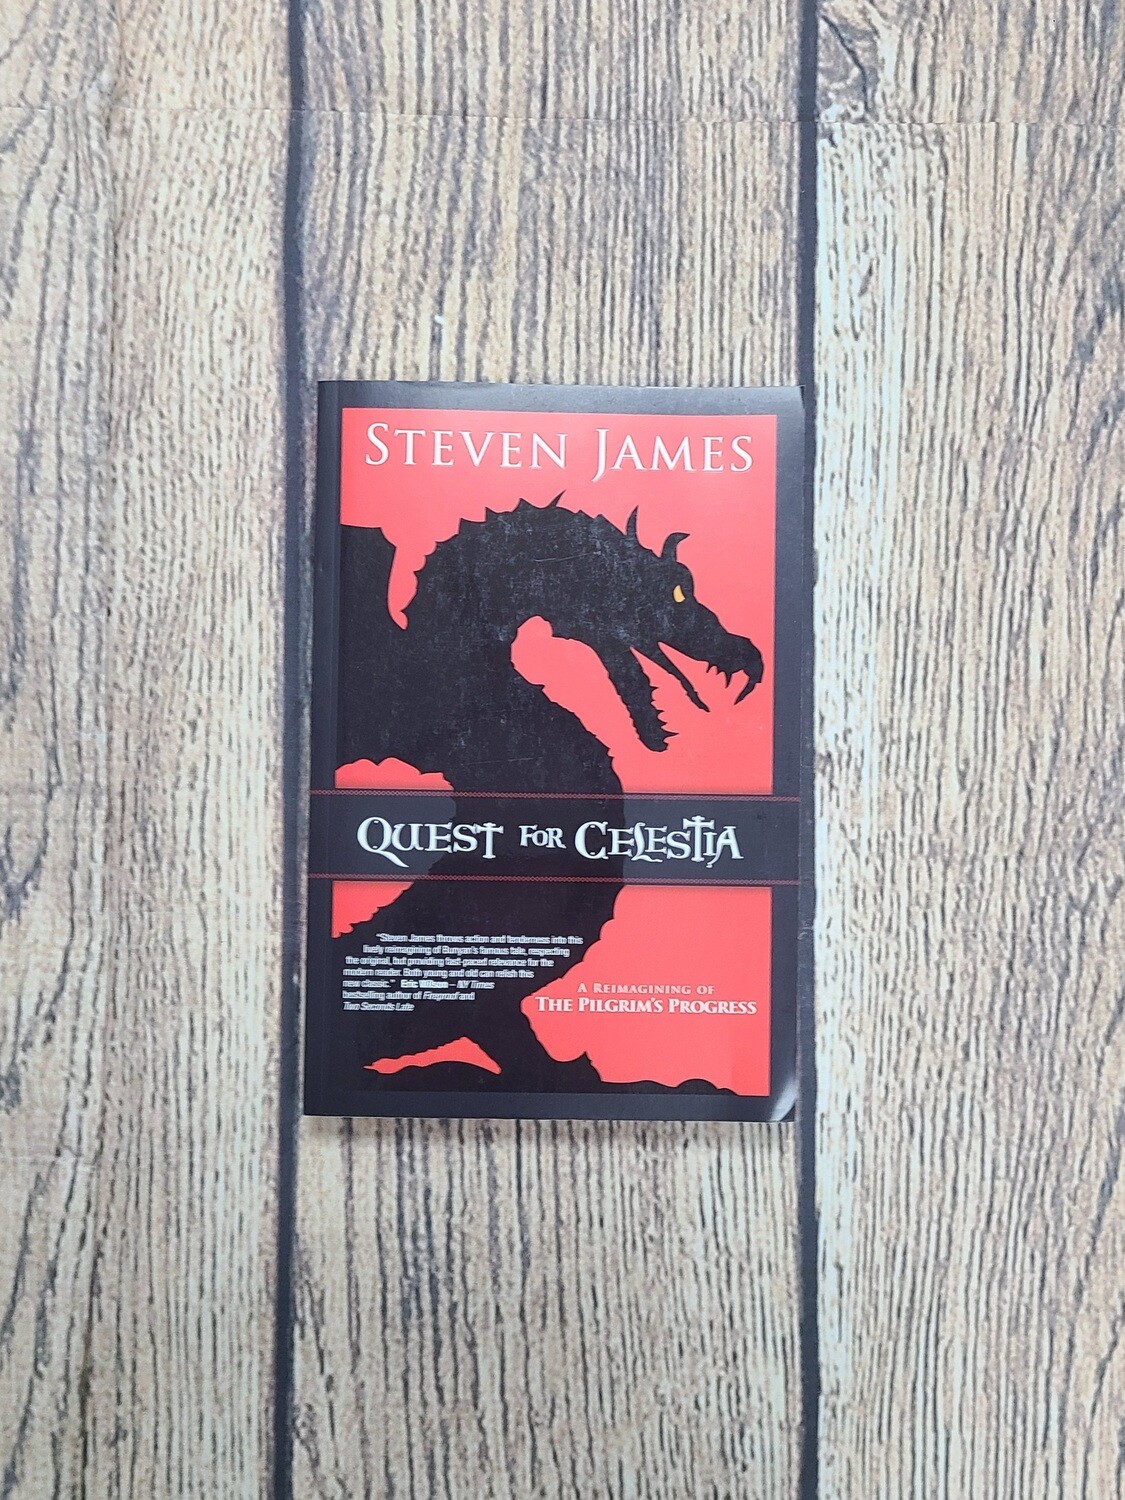 Quest for Celestia by Steven James